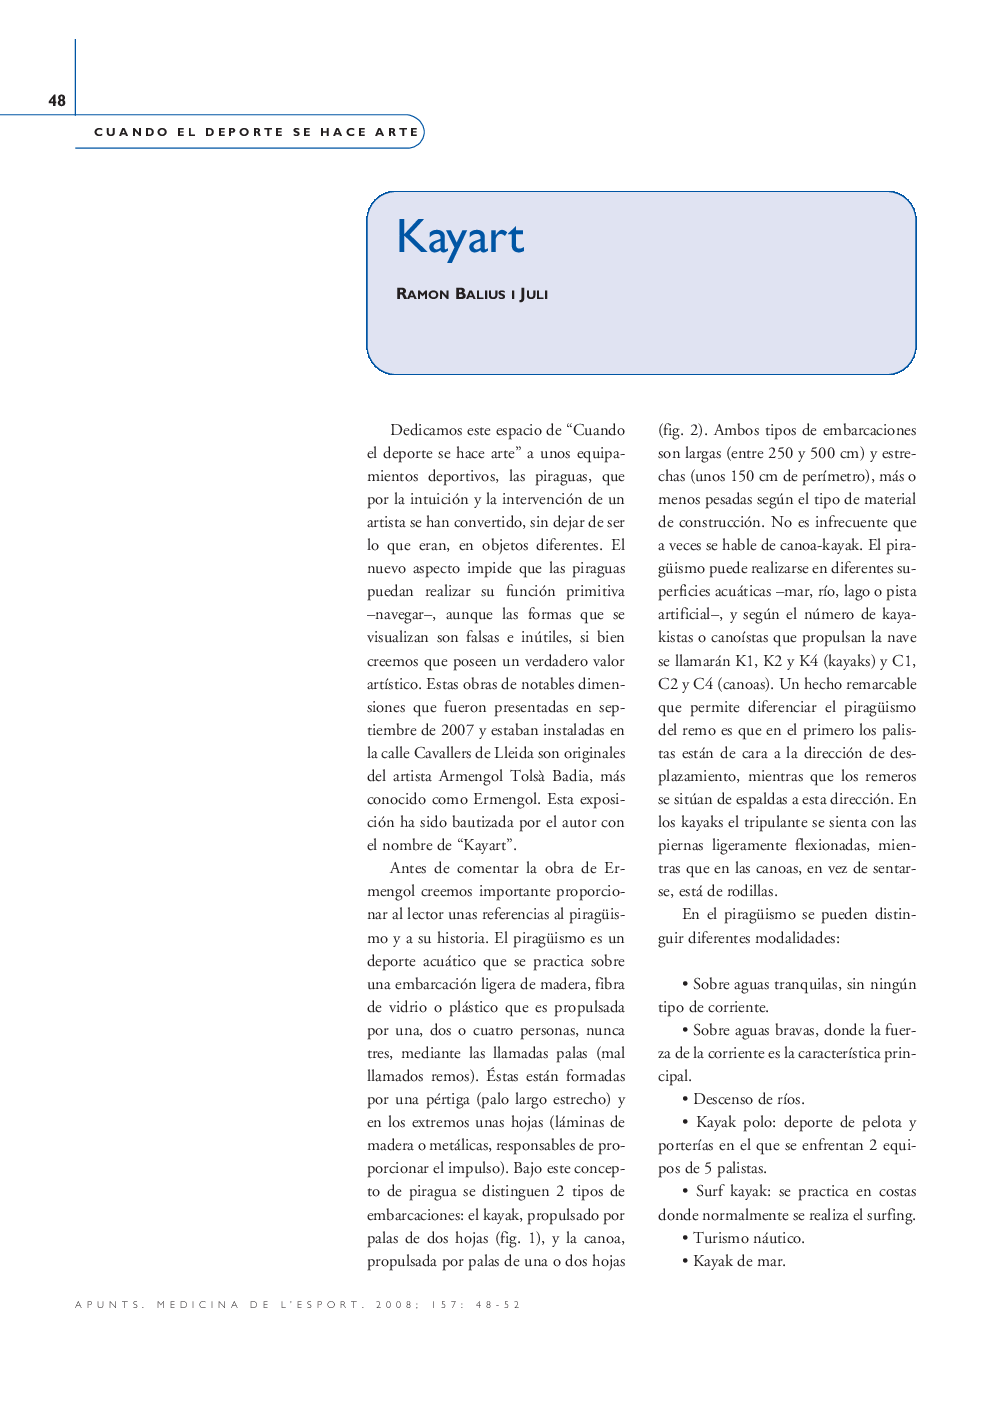 Kayart